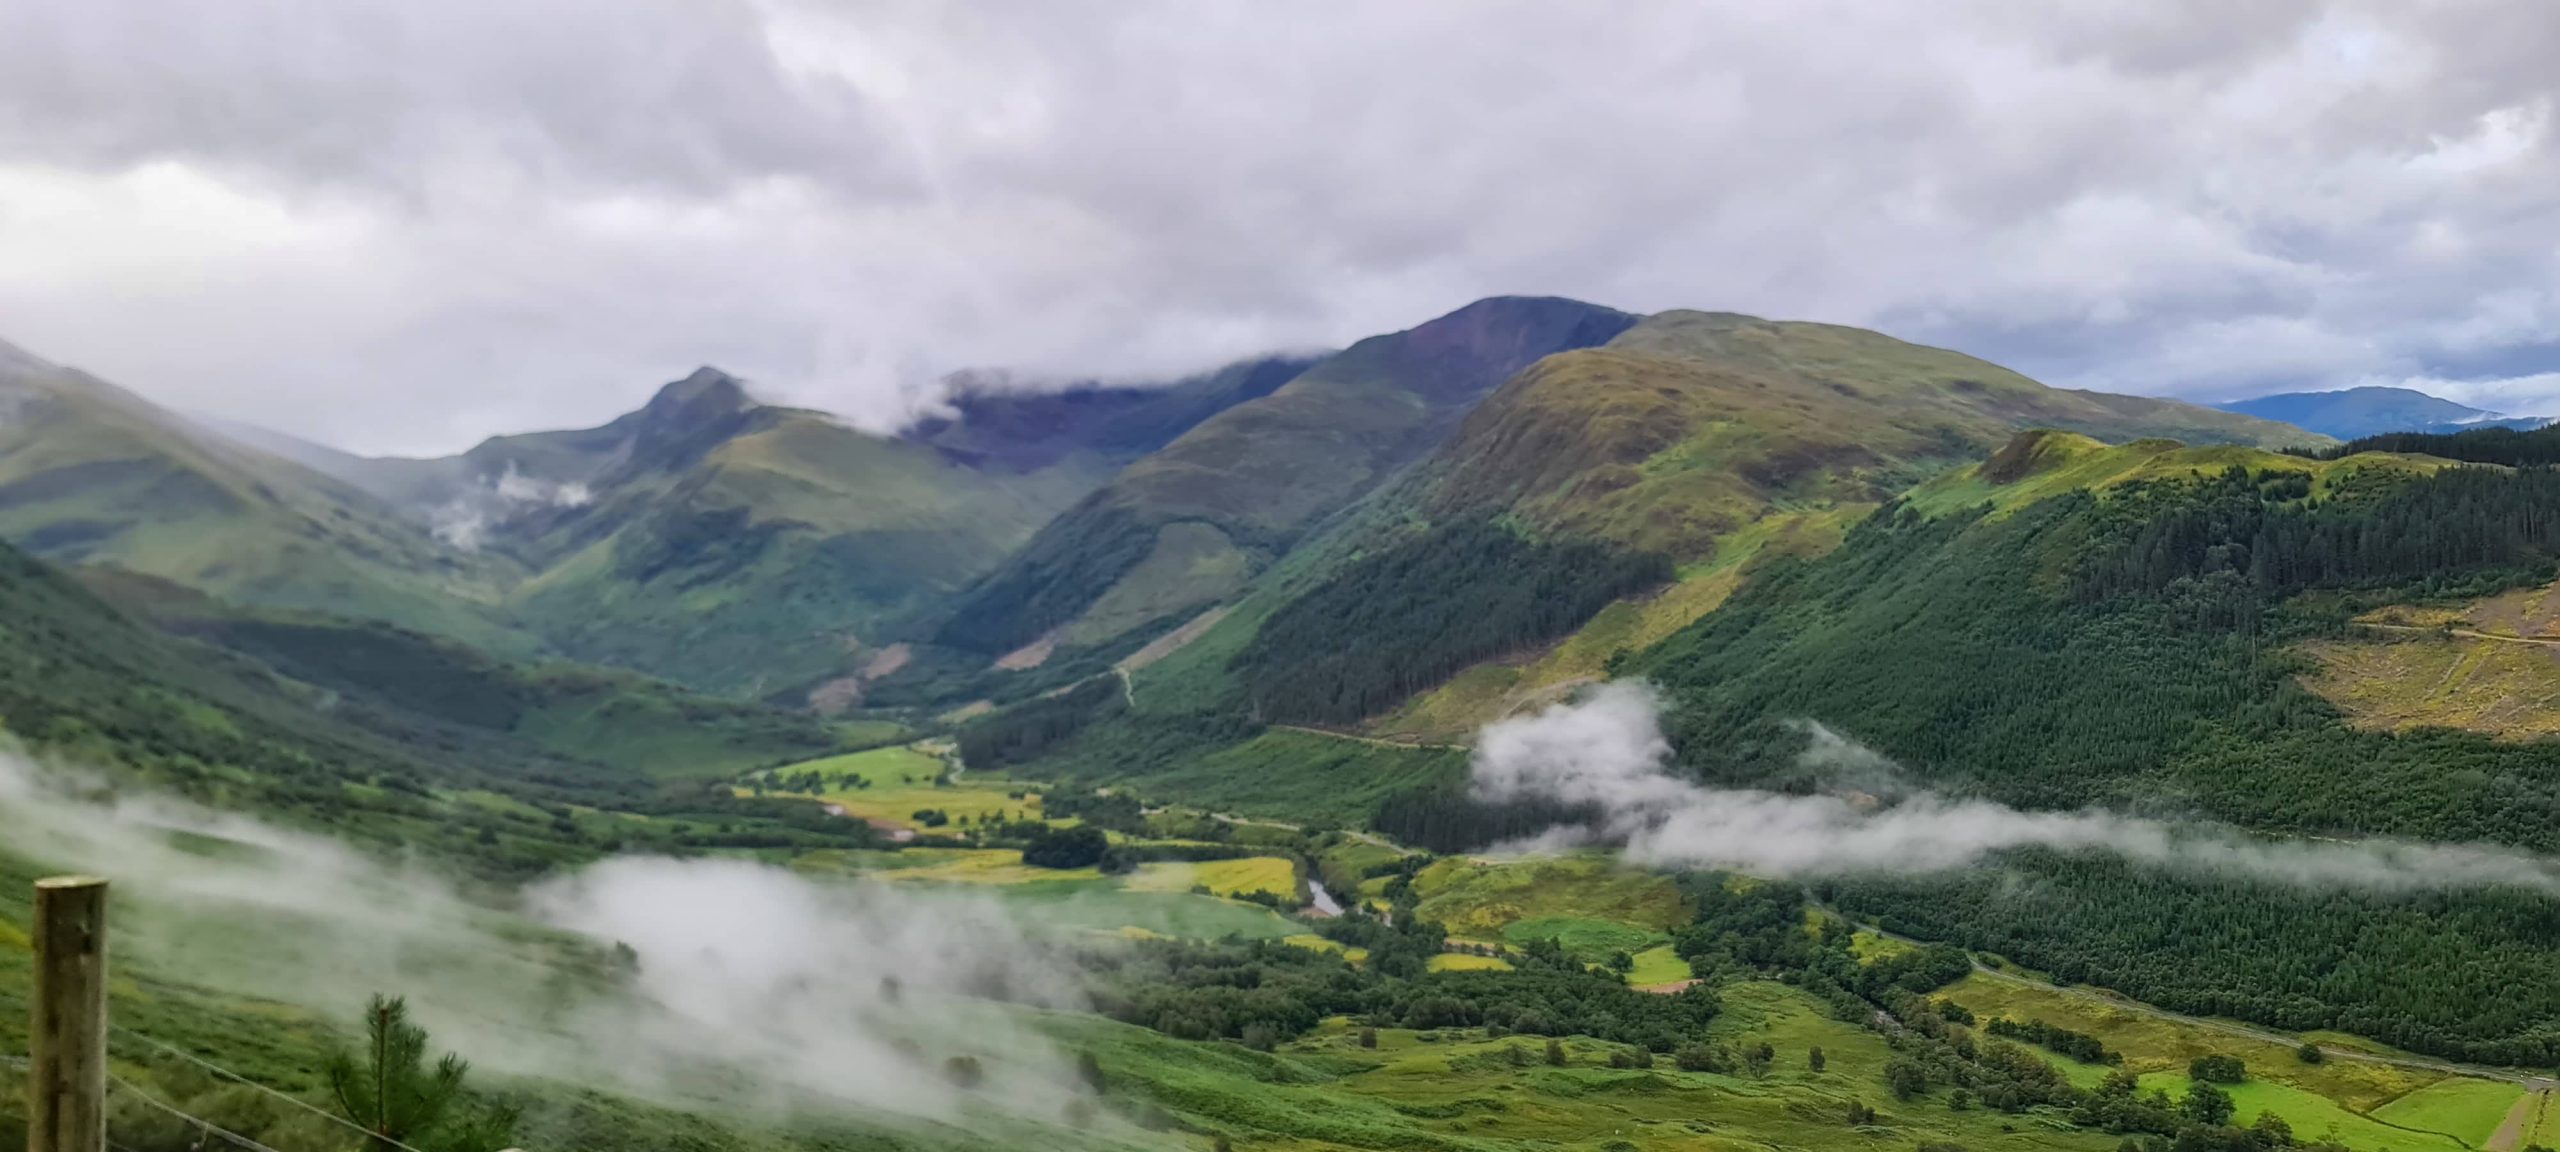 Cloudy Weather over Ben Nevis in Scotland